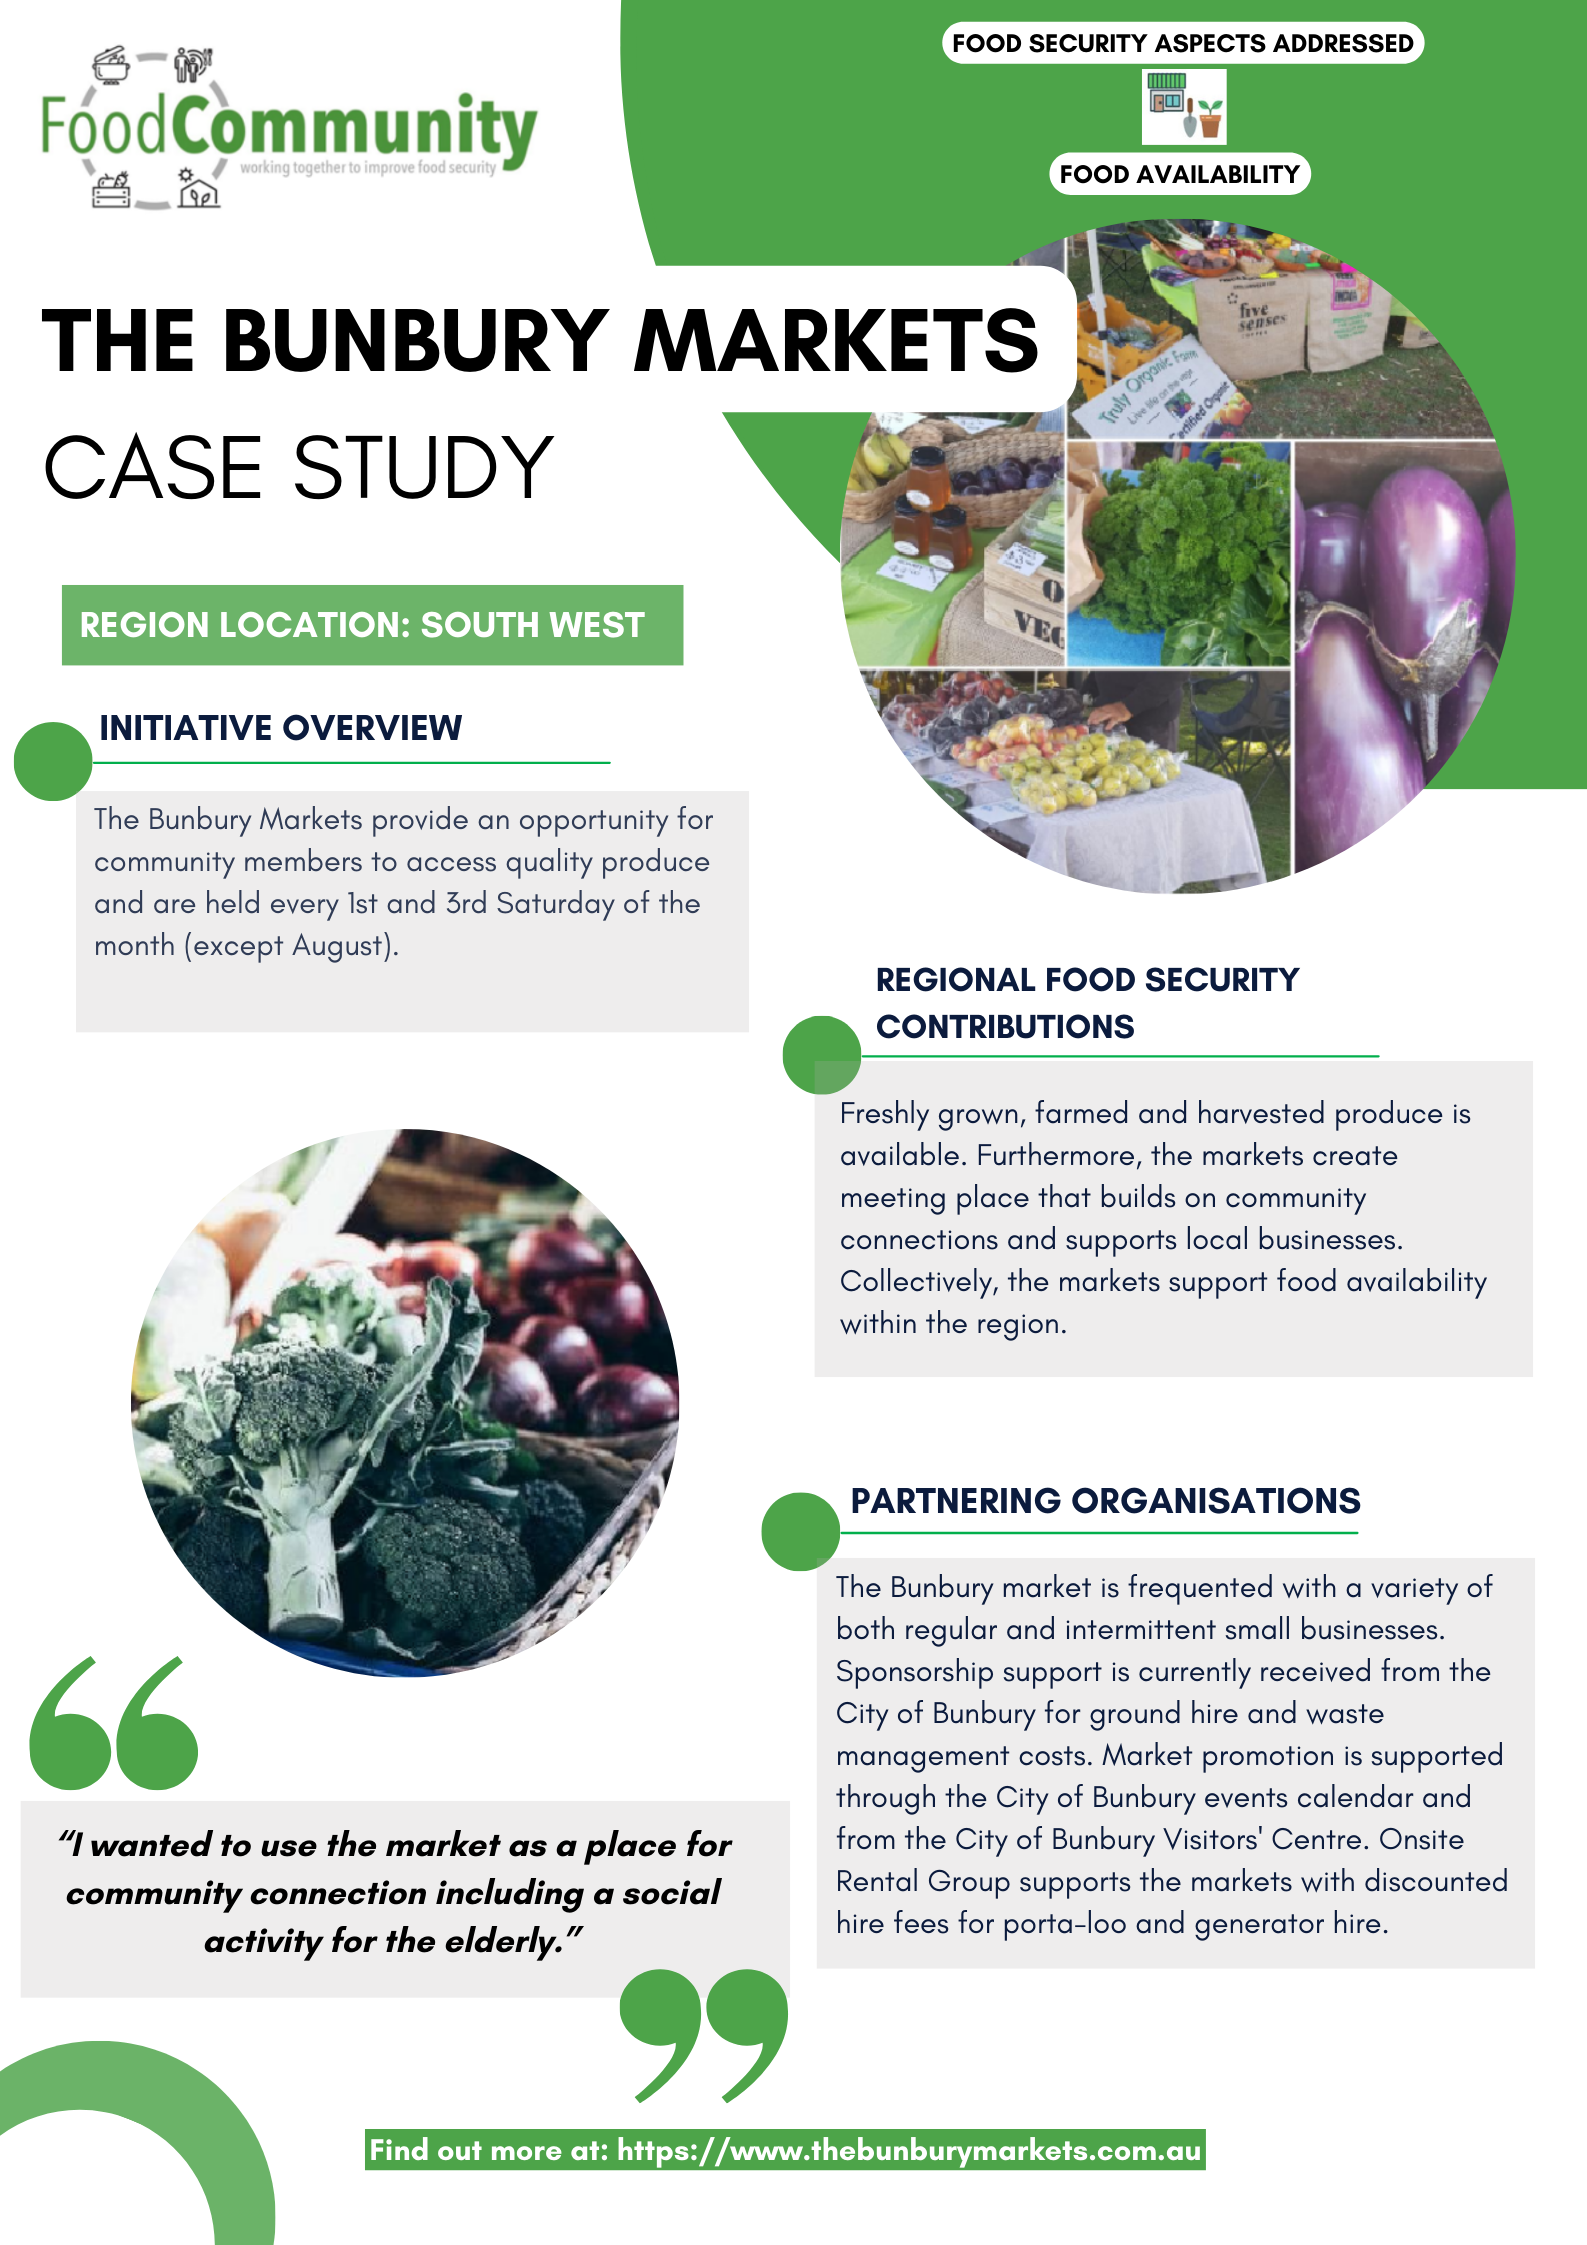 The Bunbury Markets